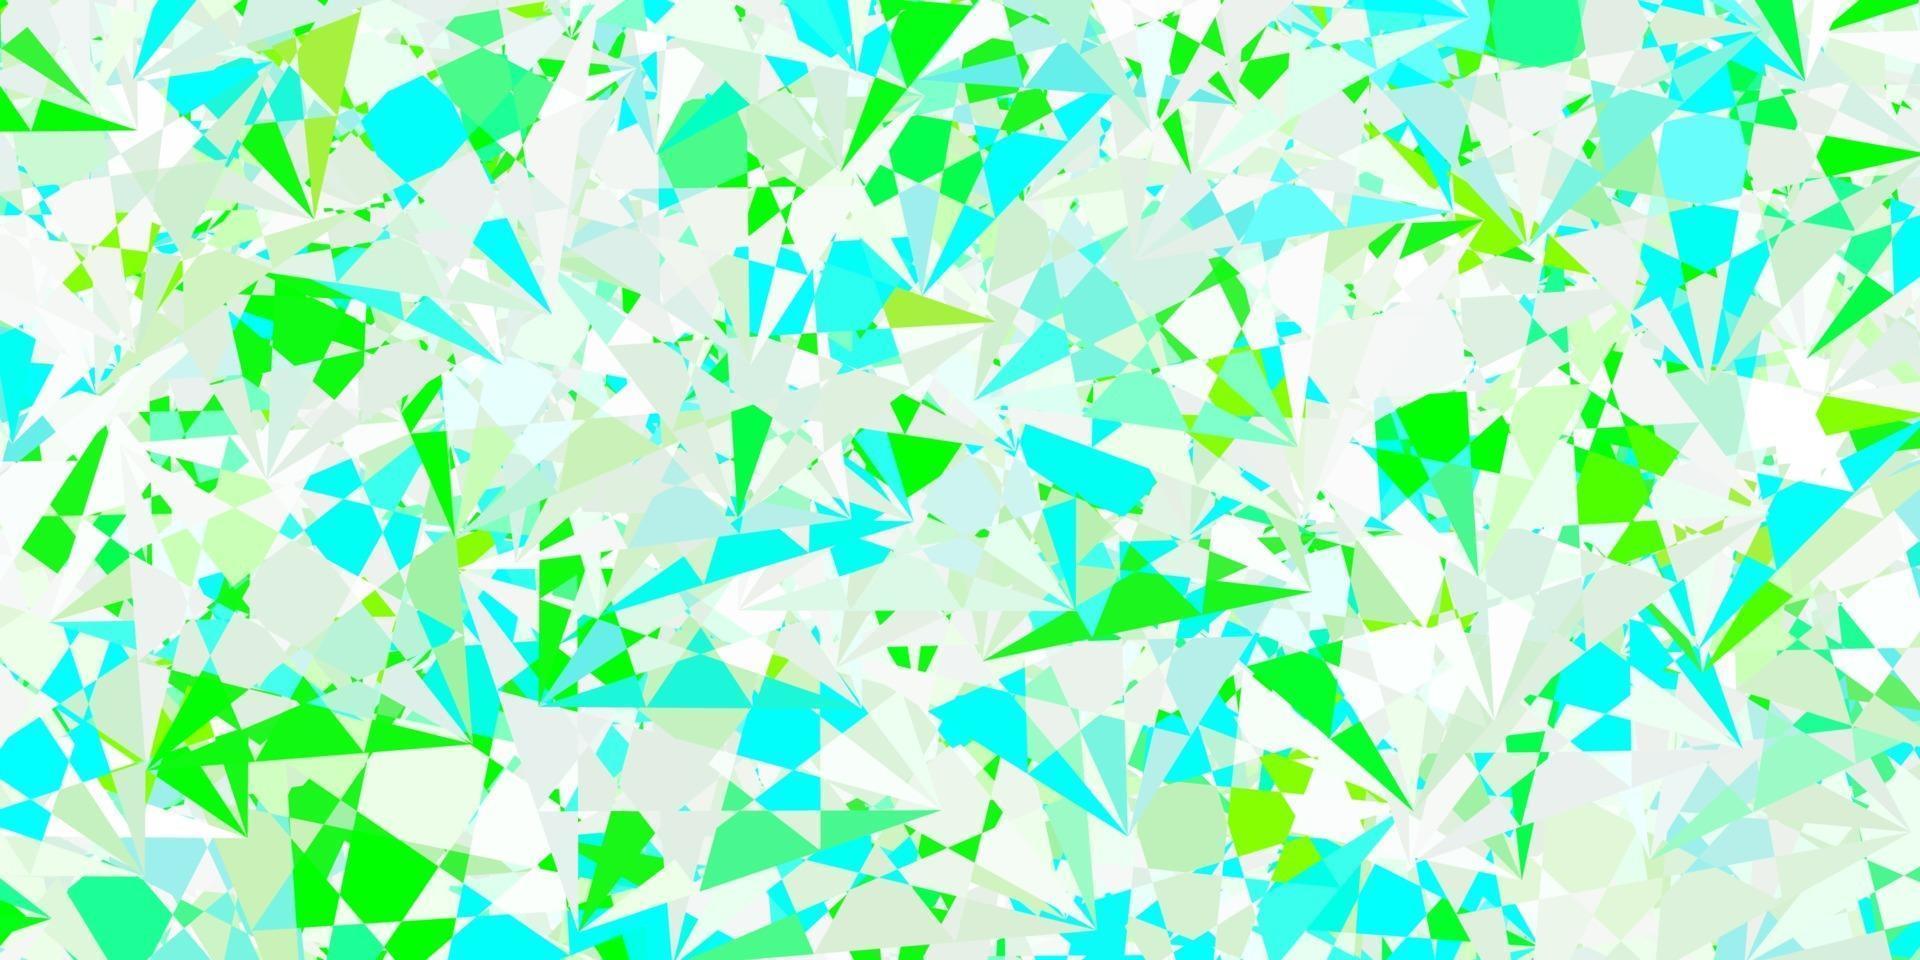 ljusgrön vektorbakgrund med polygonala former. vektor